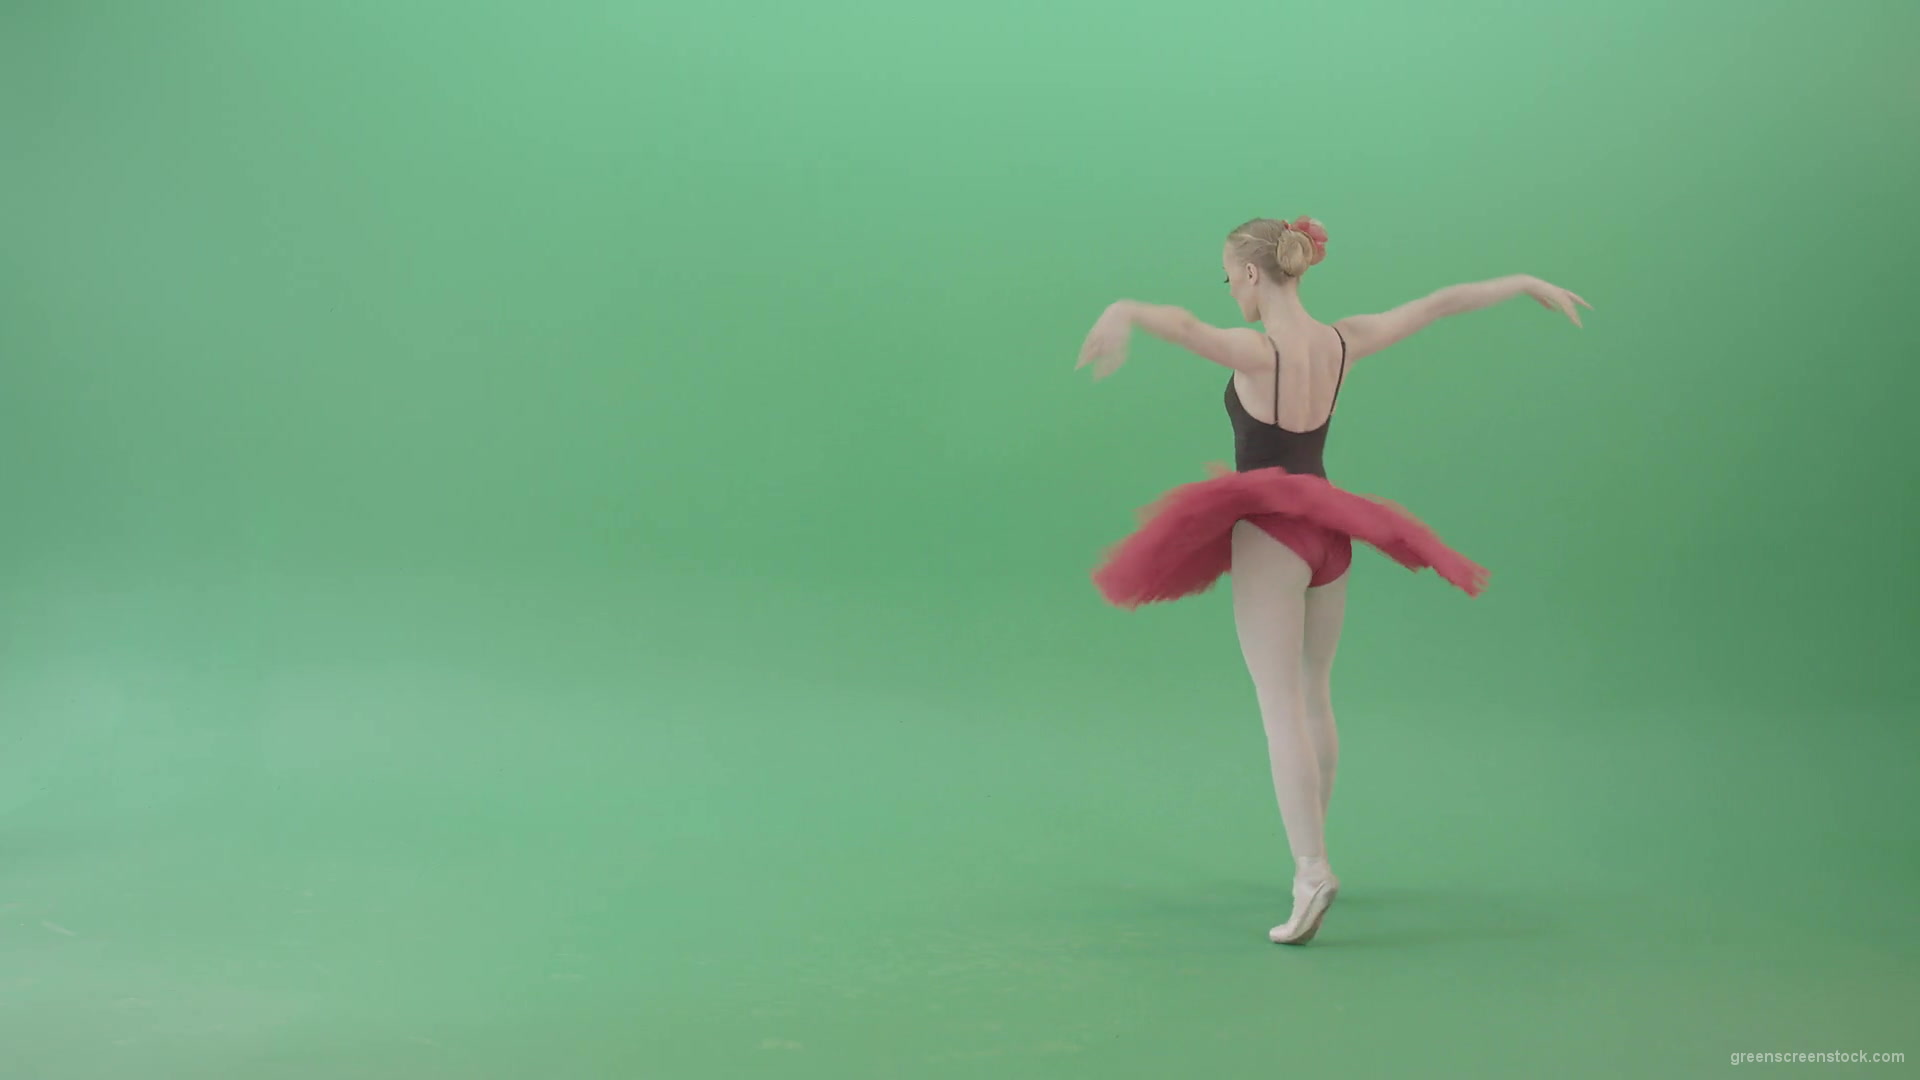 Elegant-elite-moves-by-ballet-dancing-blonde-girl-on-green-screen-4K-Video-Footage-1920_009 Green Screen Stock